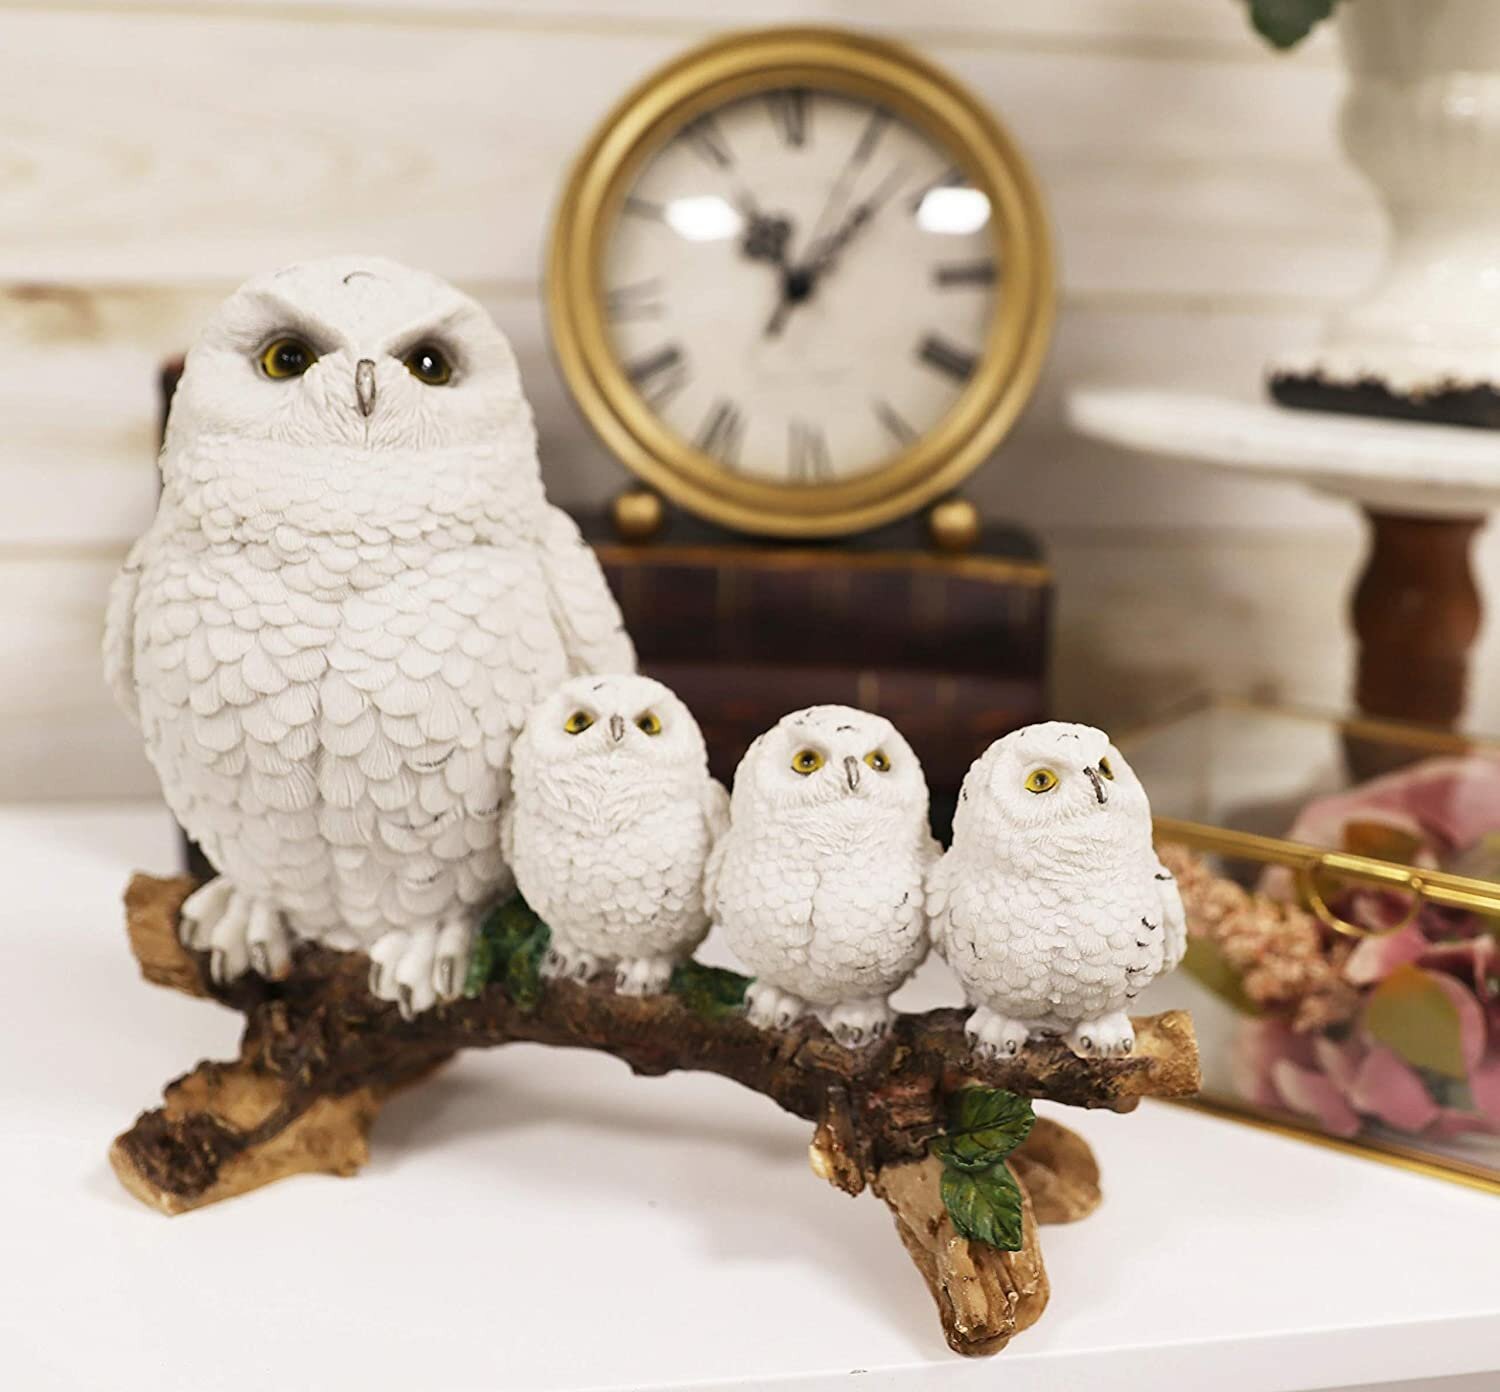 New Set Of 3 Decorative Love Hope And Faith Owls